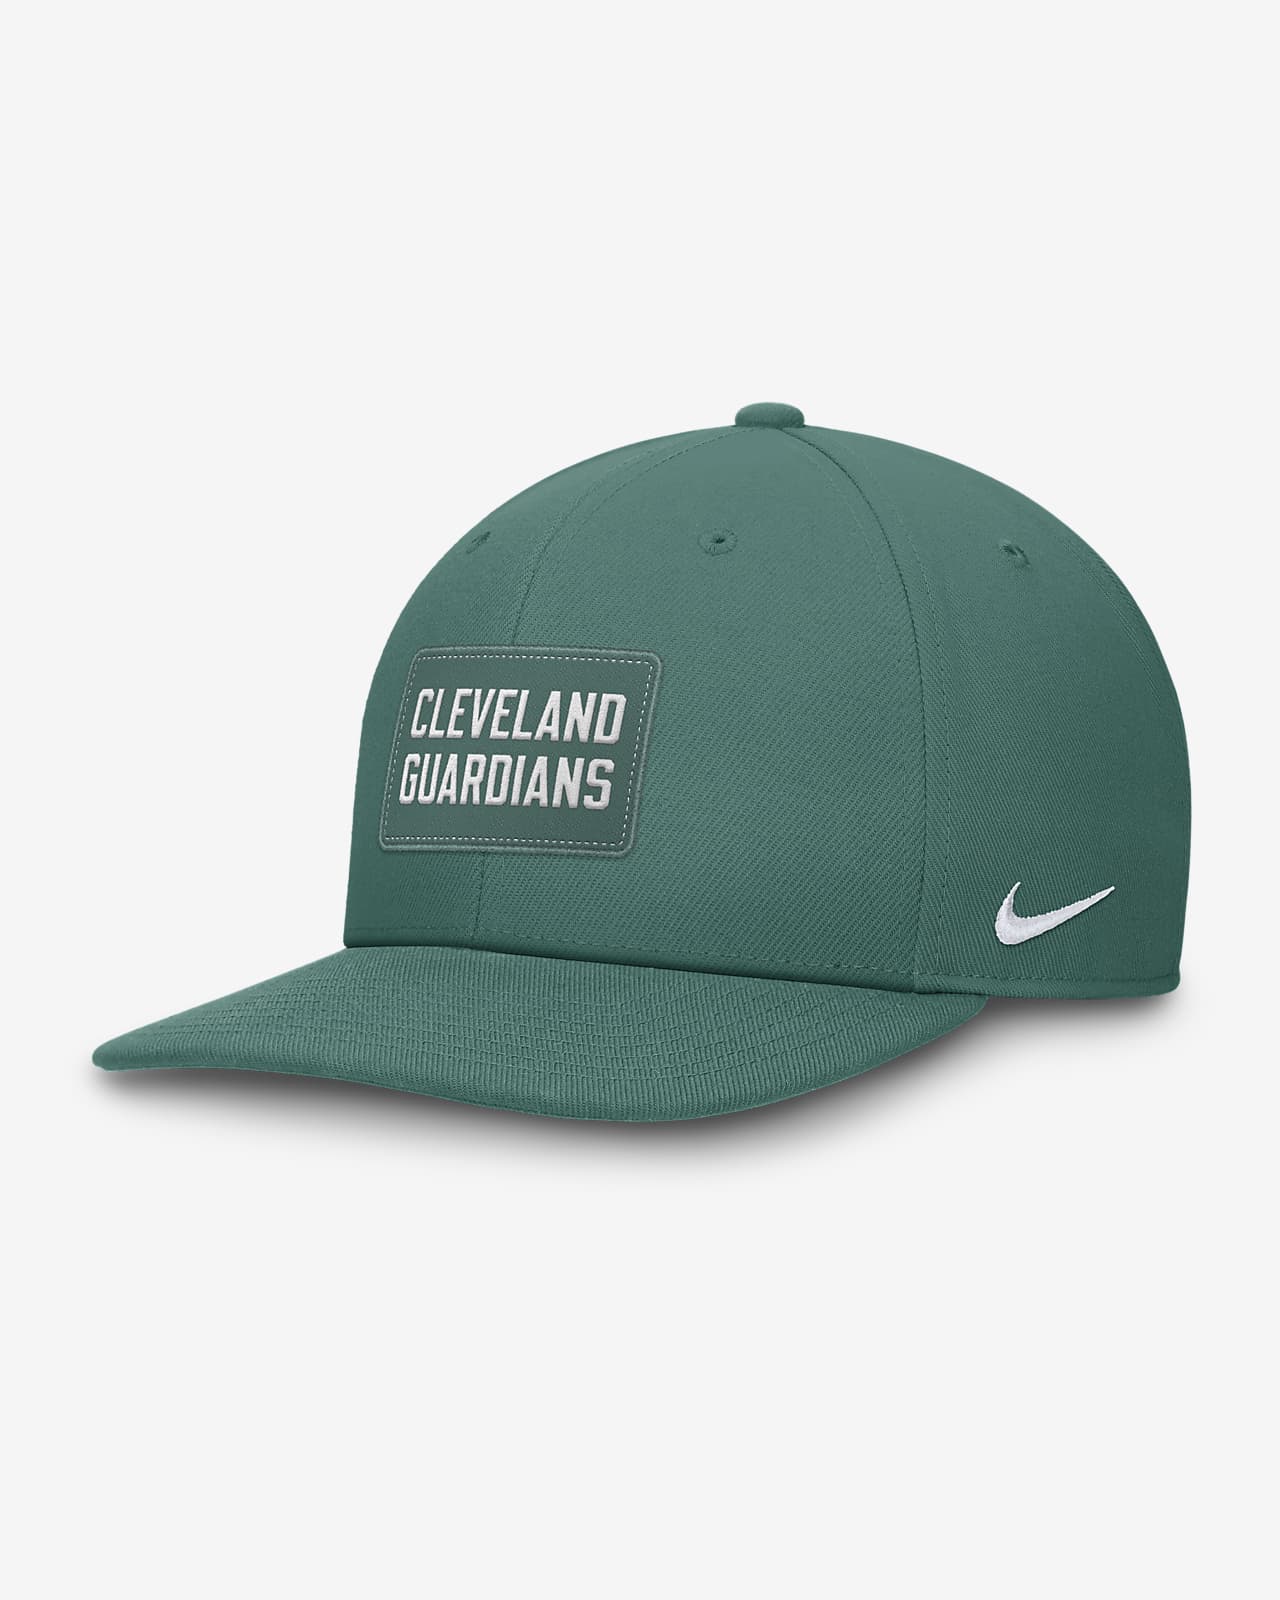 Cleveland Guardians Bicoastal Pro Men's Nike Dri-FIT MLB Adjustable Hat